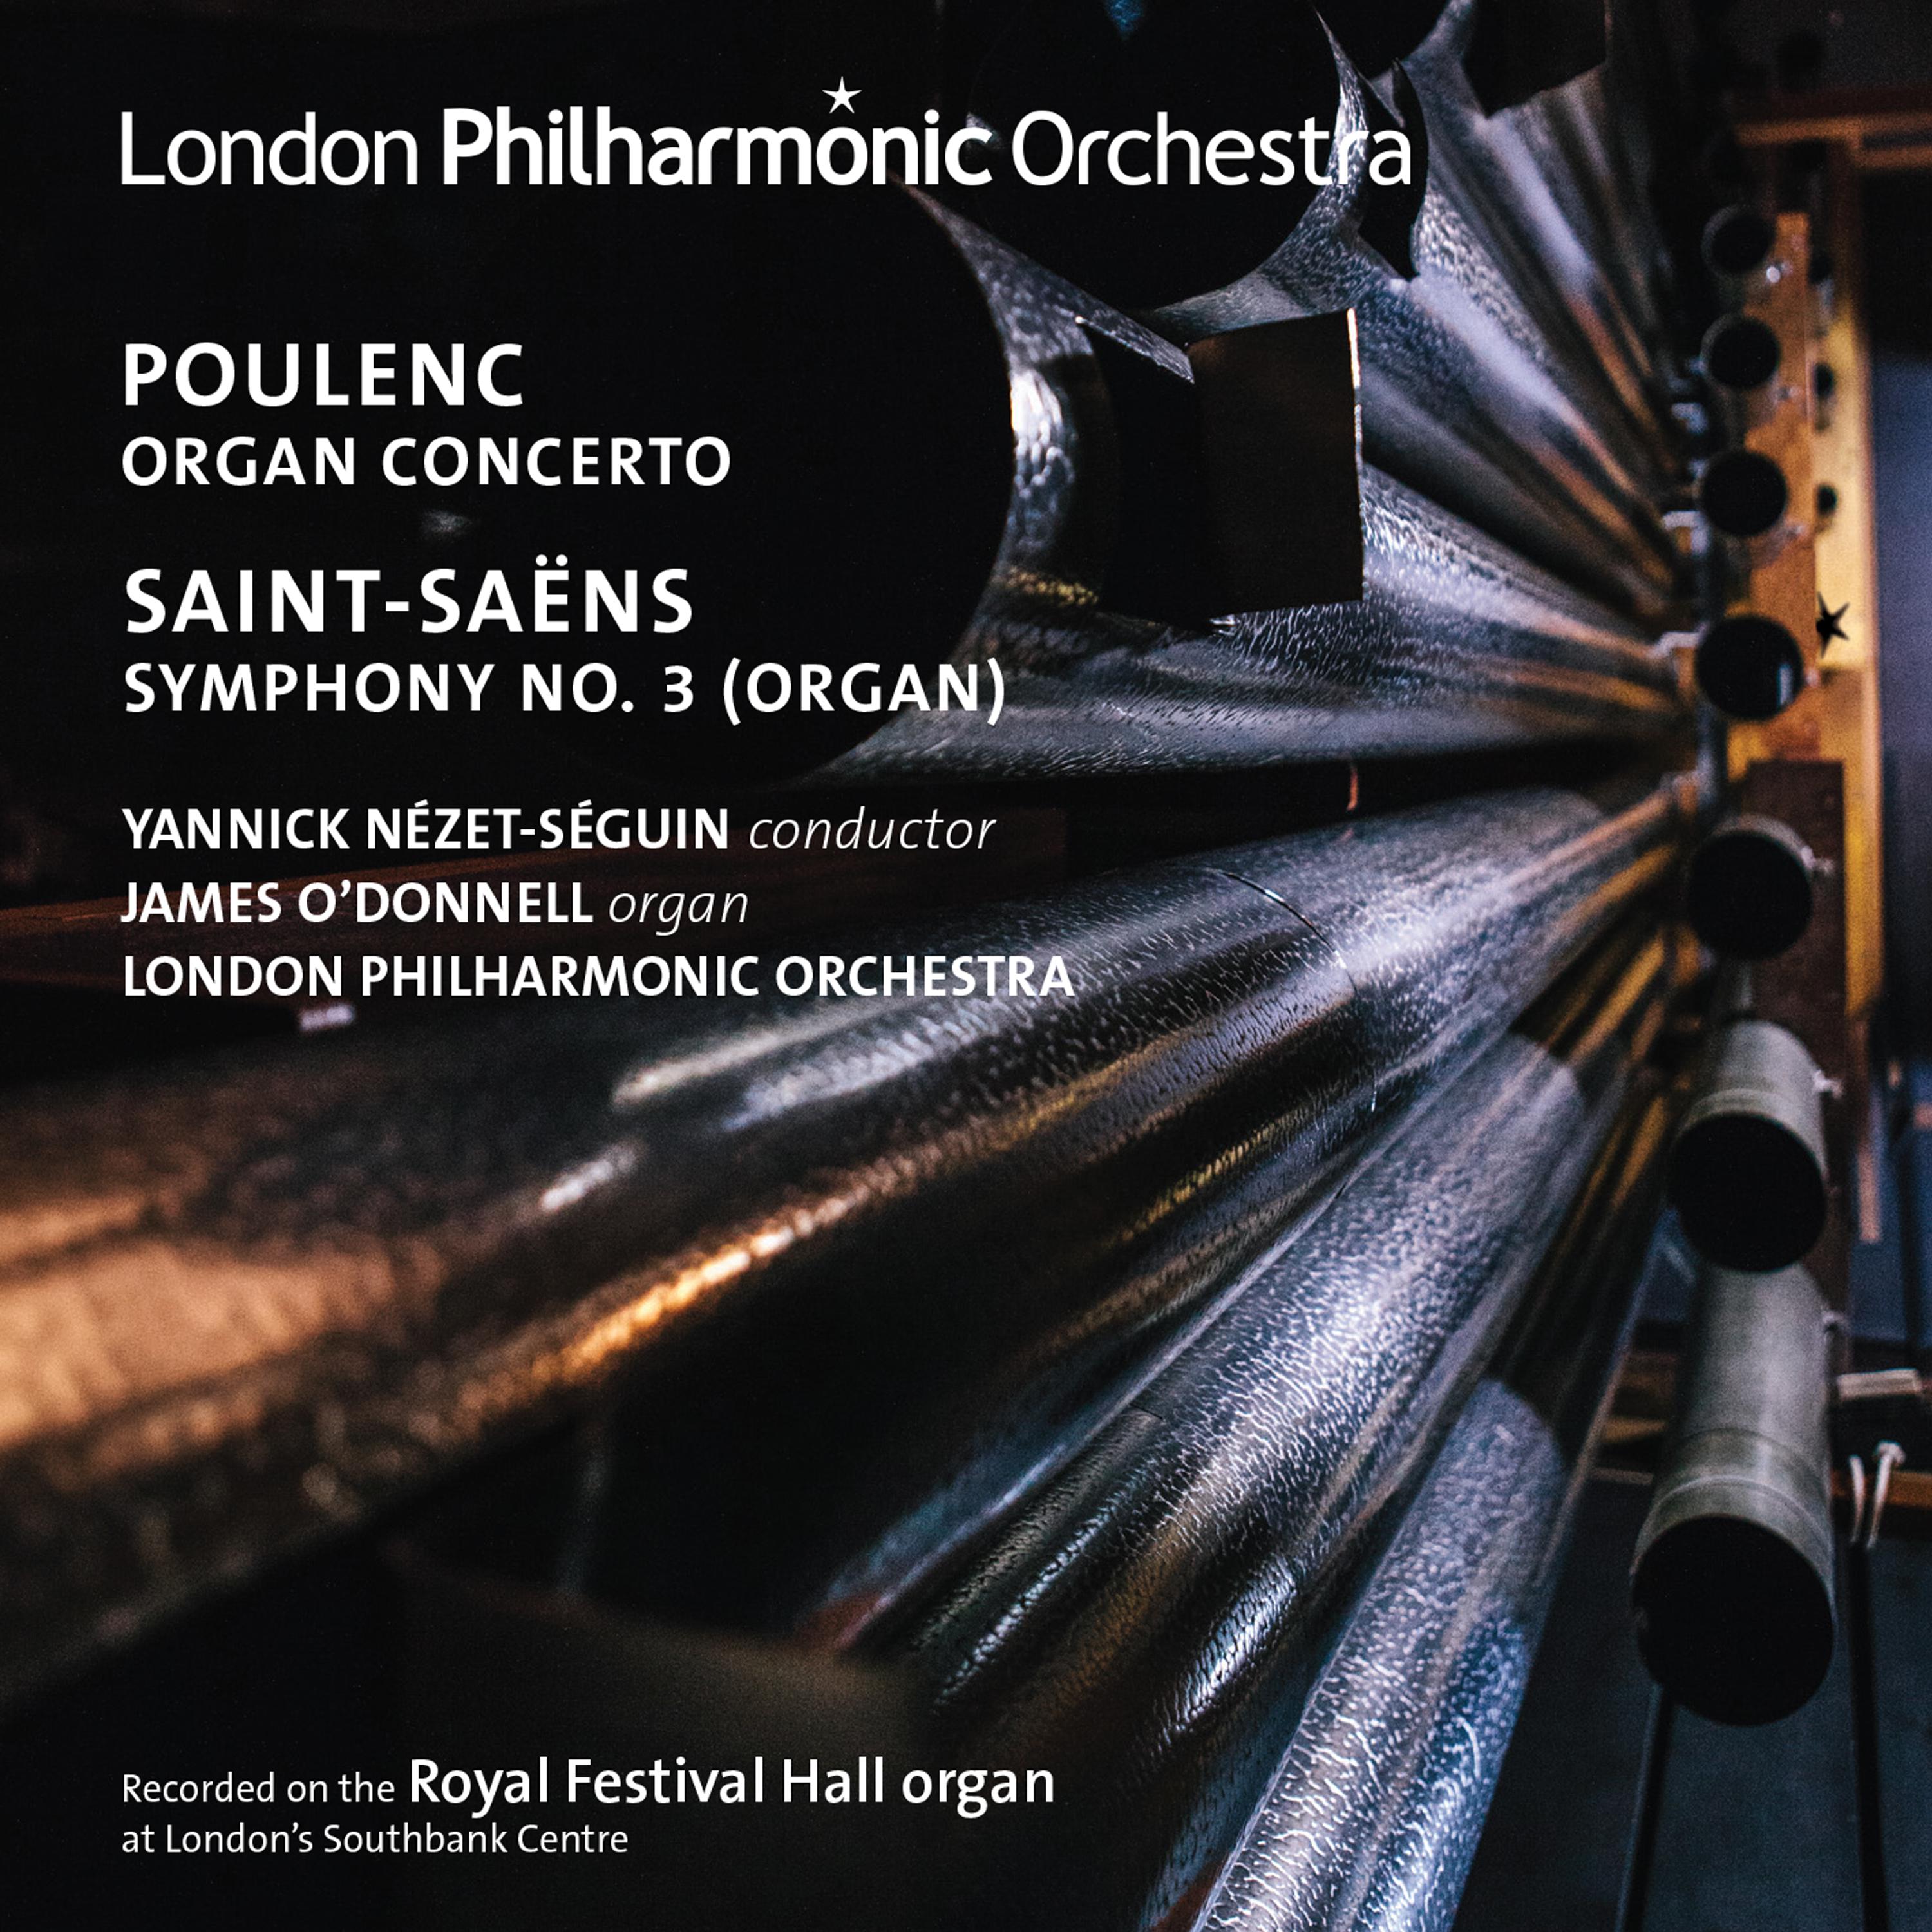 Poulenc: Organ Concerto  SaintSa ns: Symphony No. 3 " Organ" Live